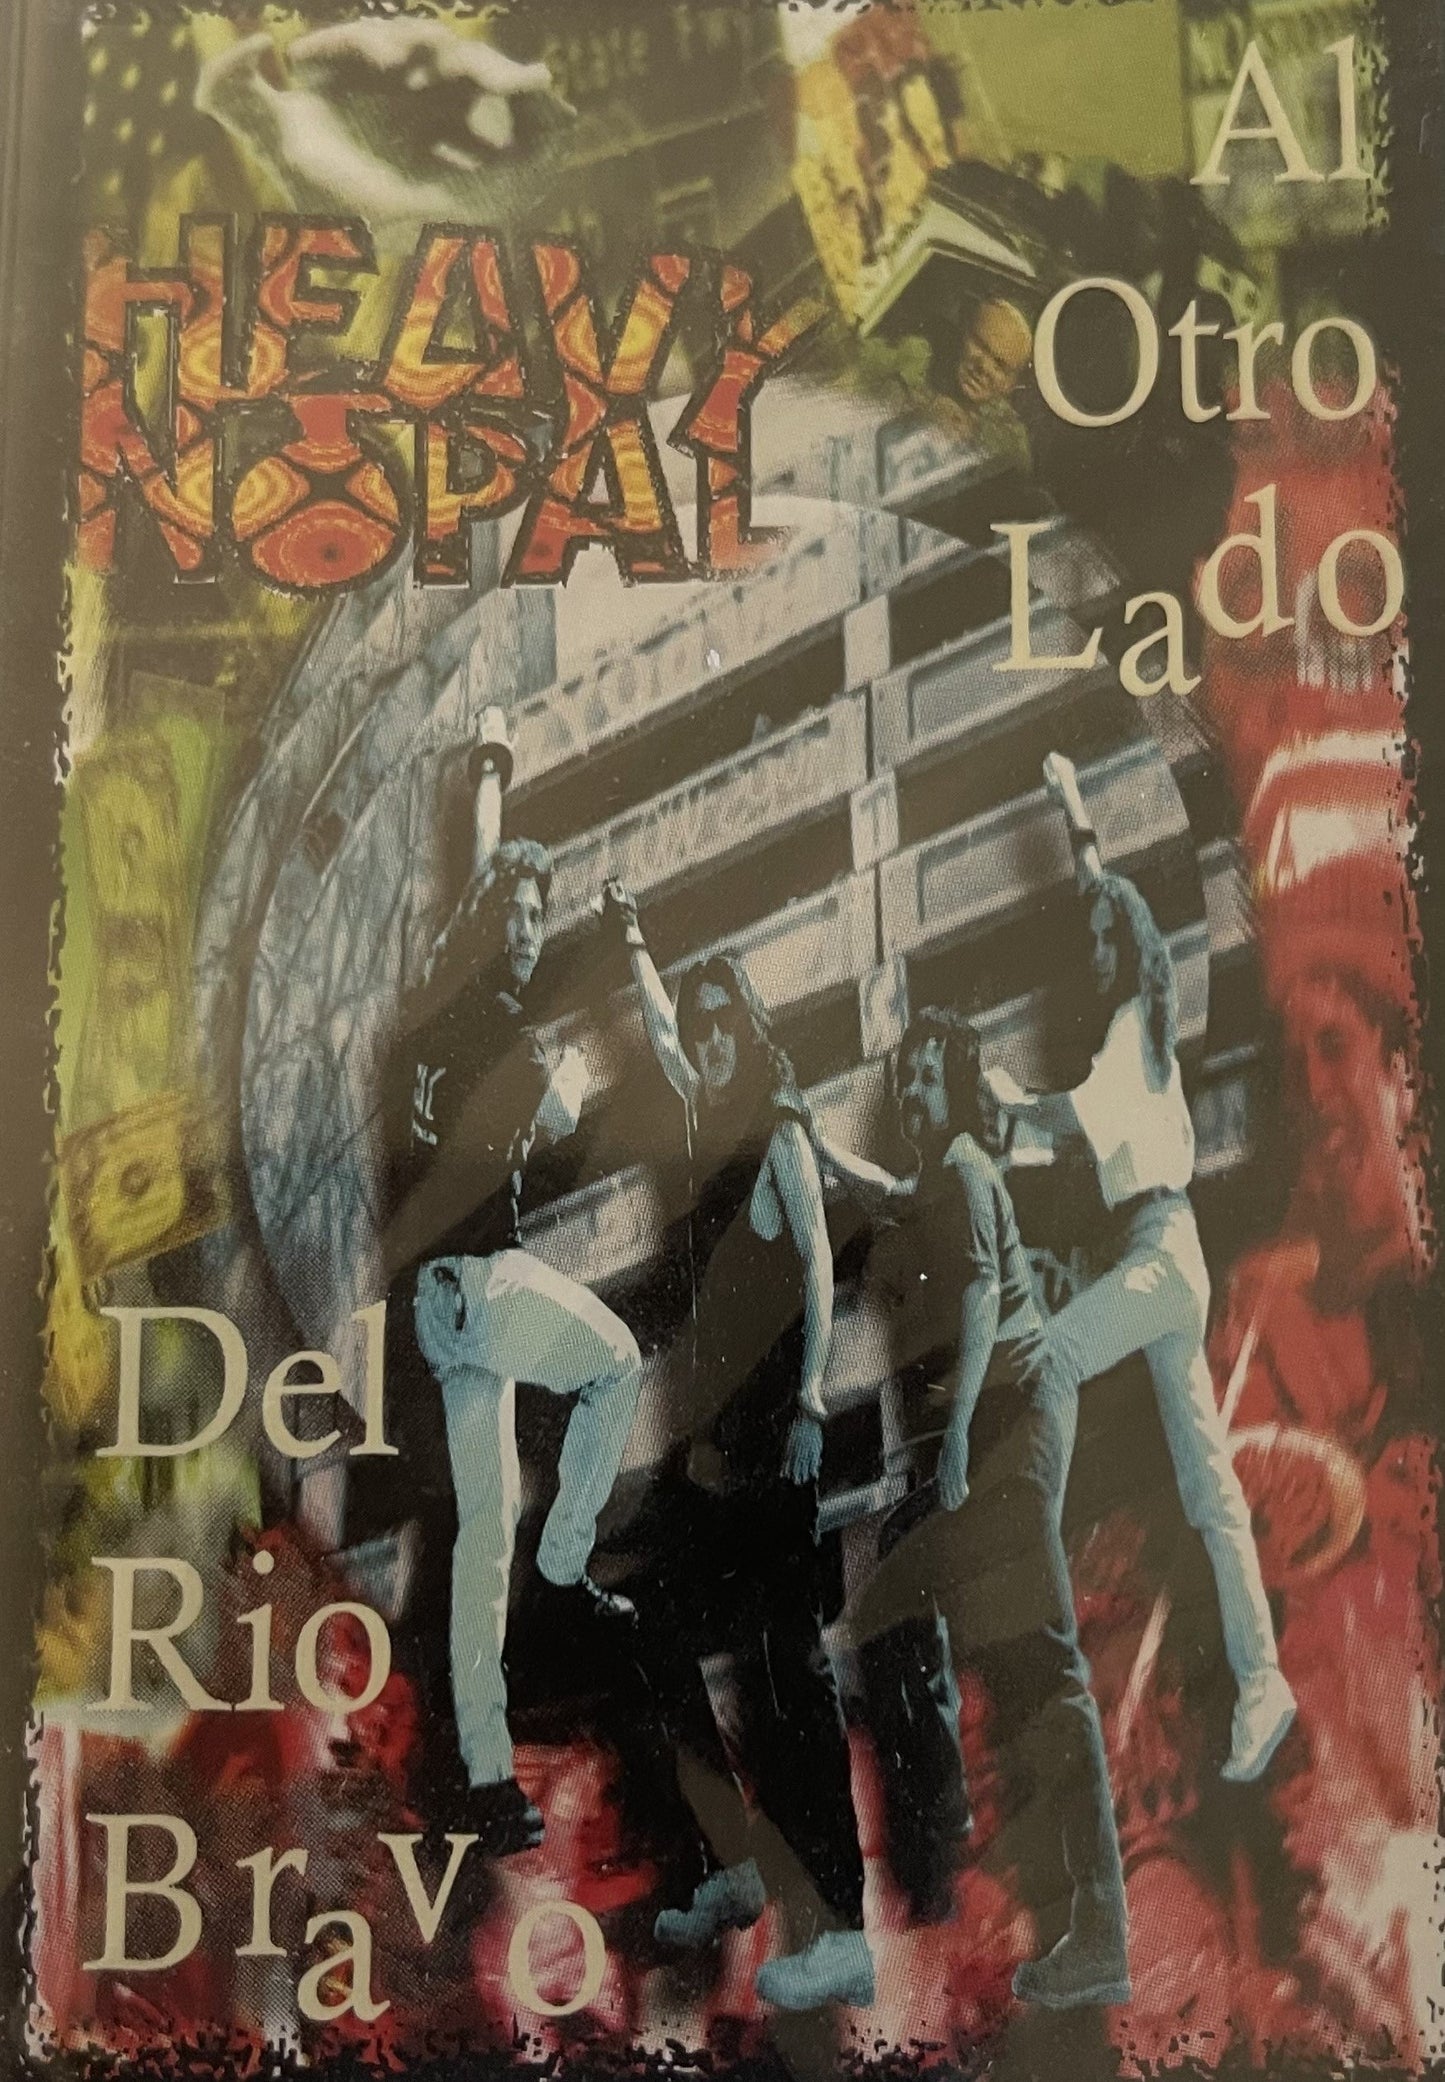 Heavy Nopal – Al Otro Lado Del Rio Bravo (Cassette)